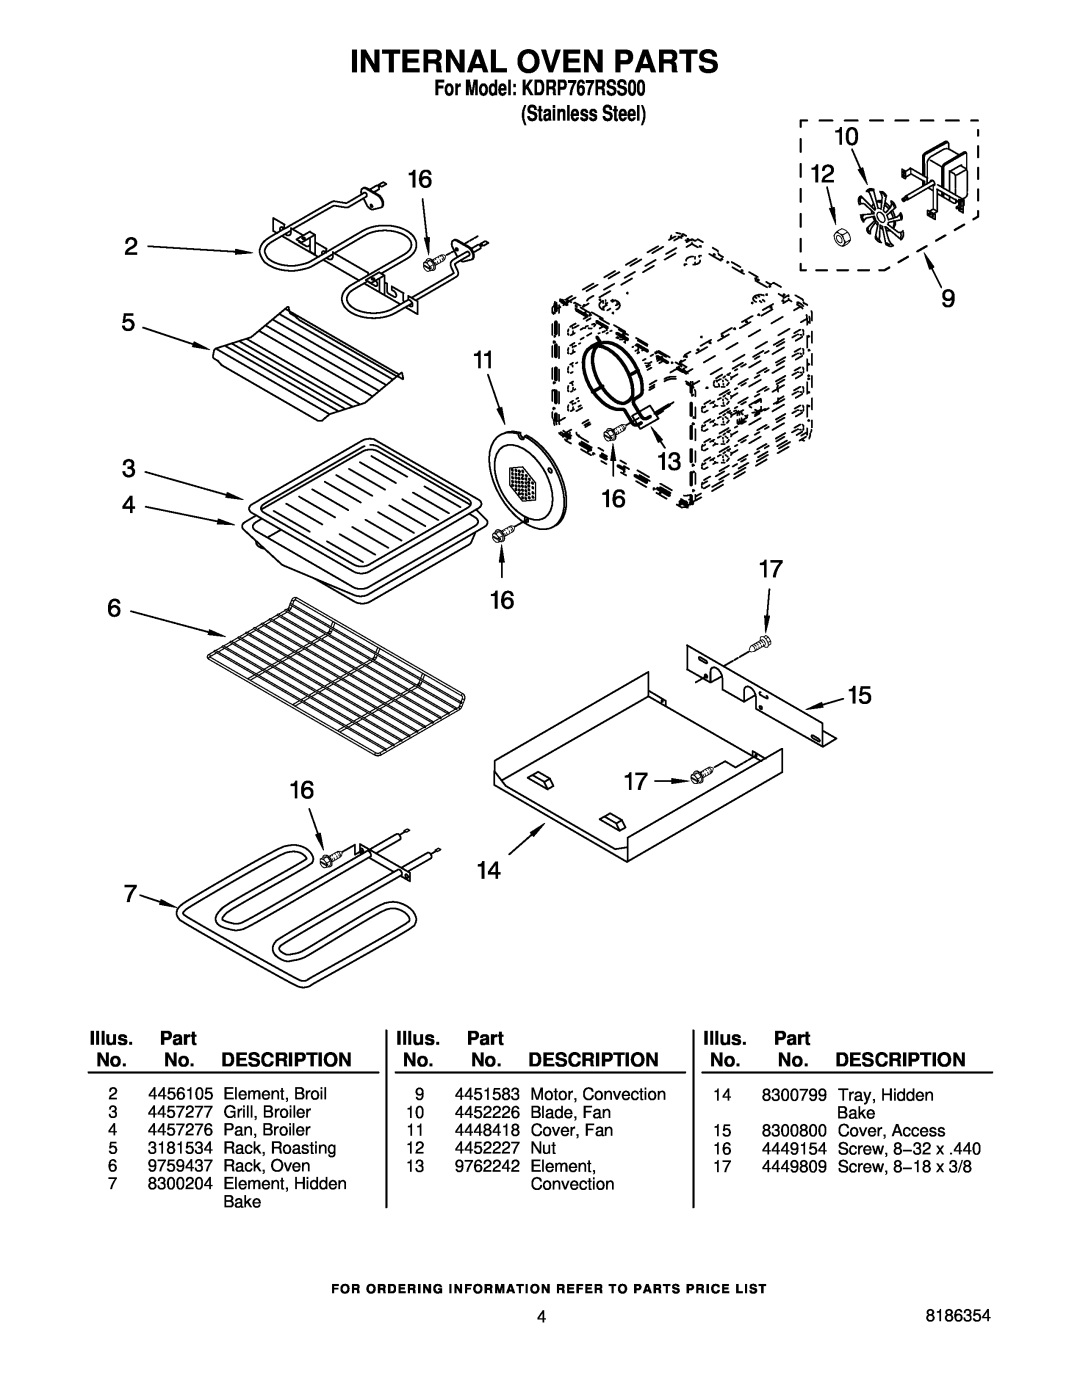 KitchenAid manual Internal Oven Parts, For Model KDRP767RSS00 Stainless Steel, Illus. Part No. No. DESCRIPTION 